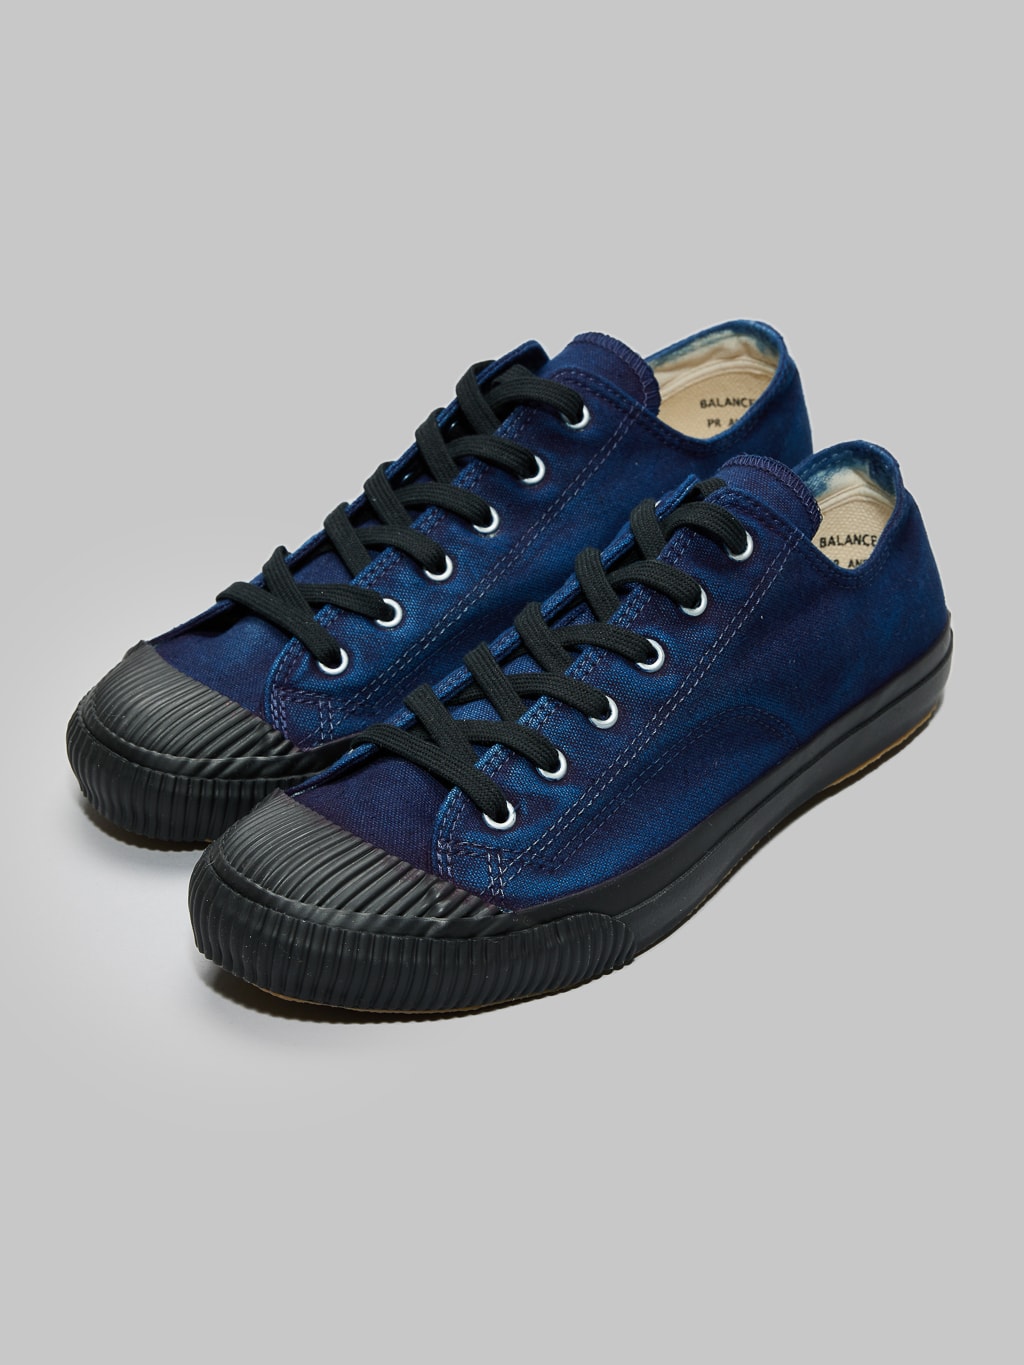 Pras shellcap low sneakers indigo hand dyed vulcanized sole